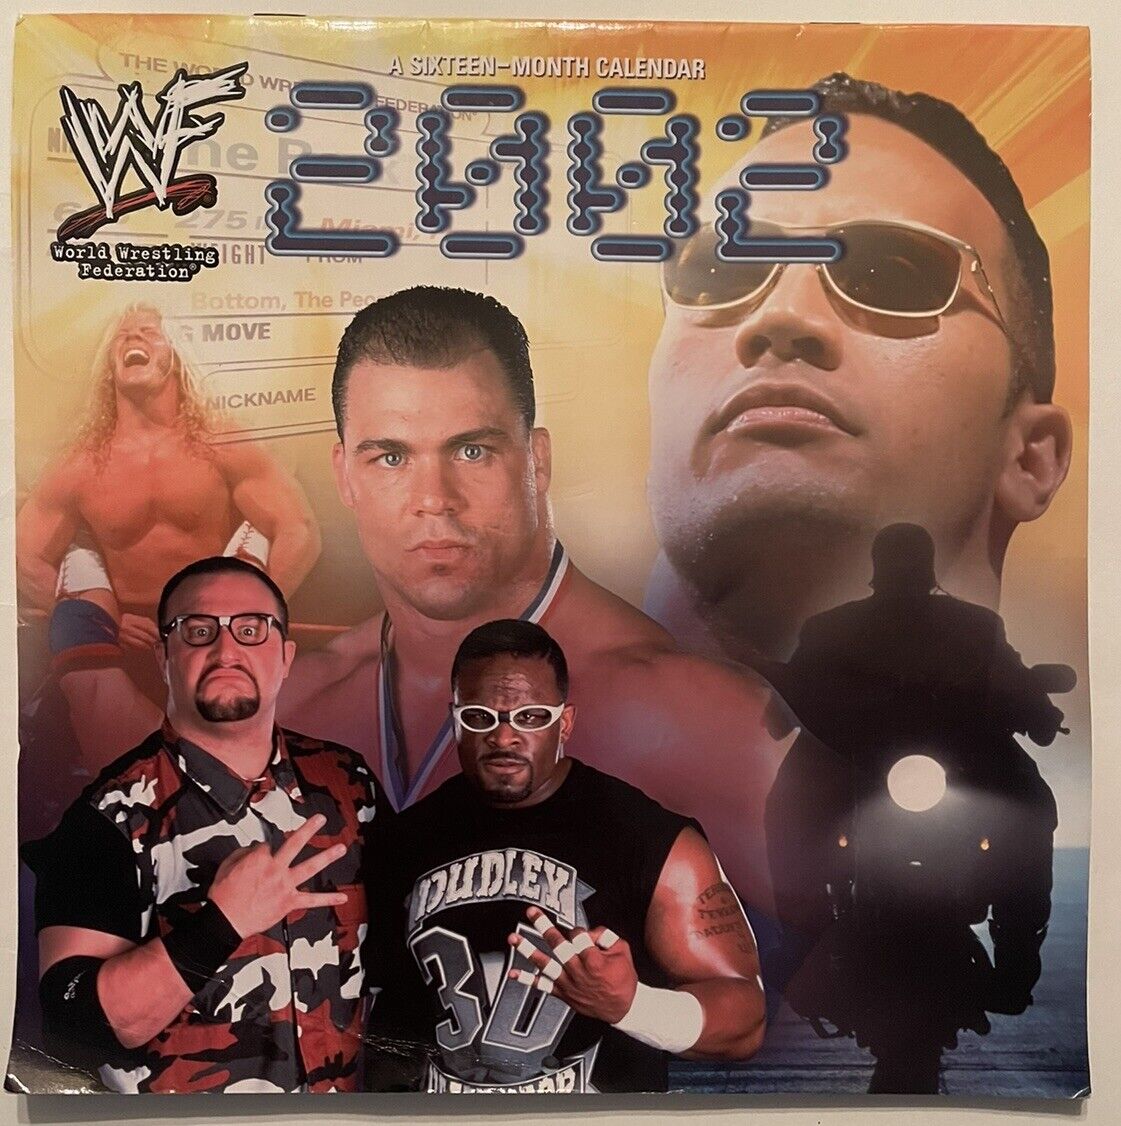 VTG WWF 2002 Calendar Unused The Rock Chris Jericho Chyna 12 Months